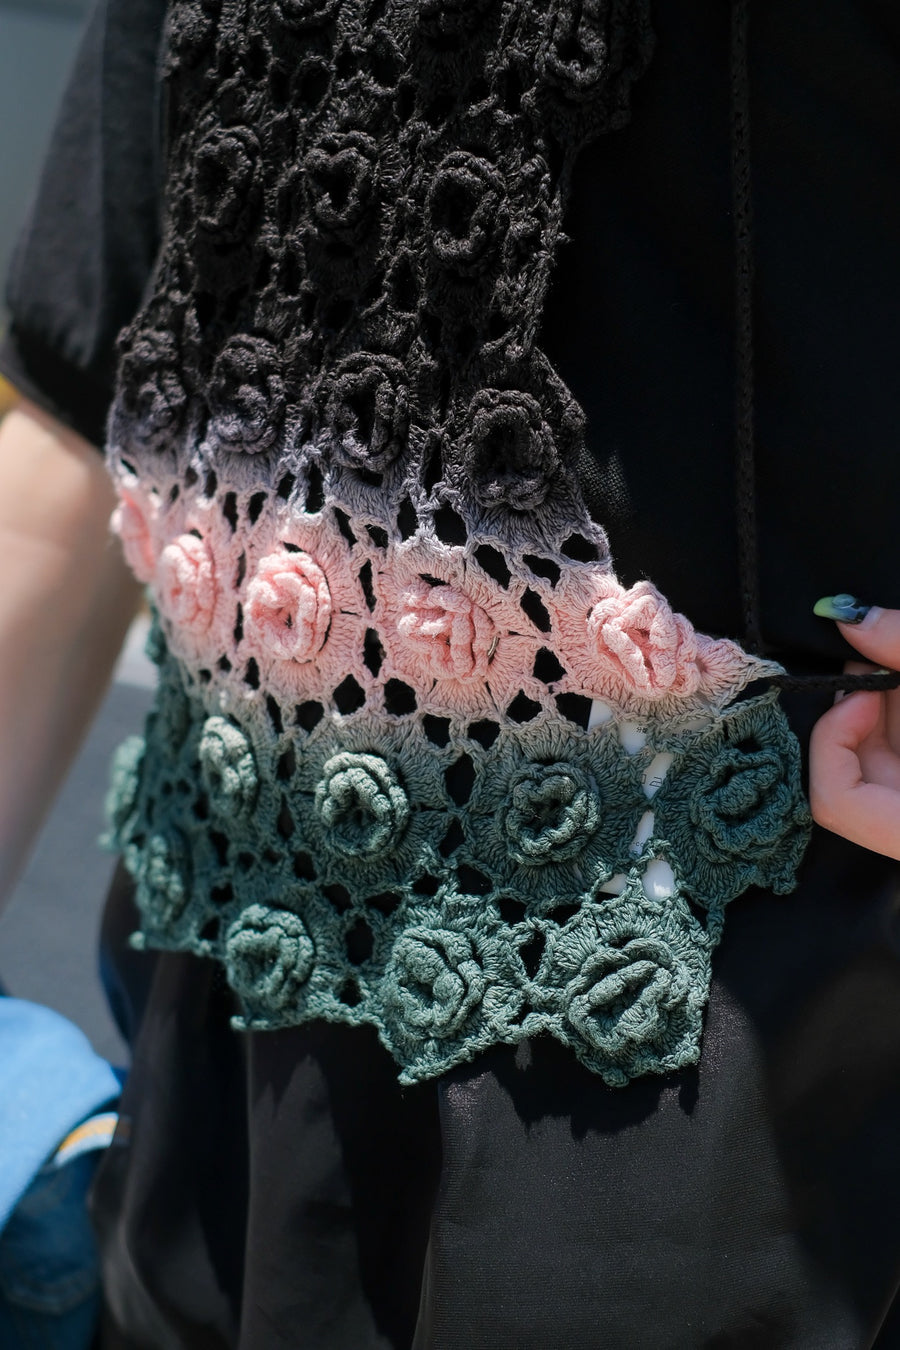 tiit tokyo  gradation dye knit tops